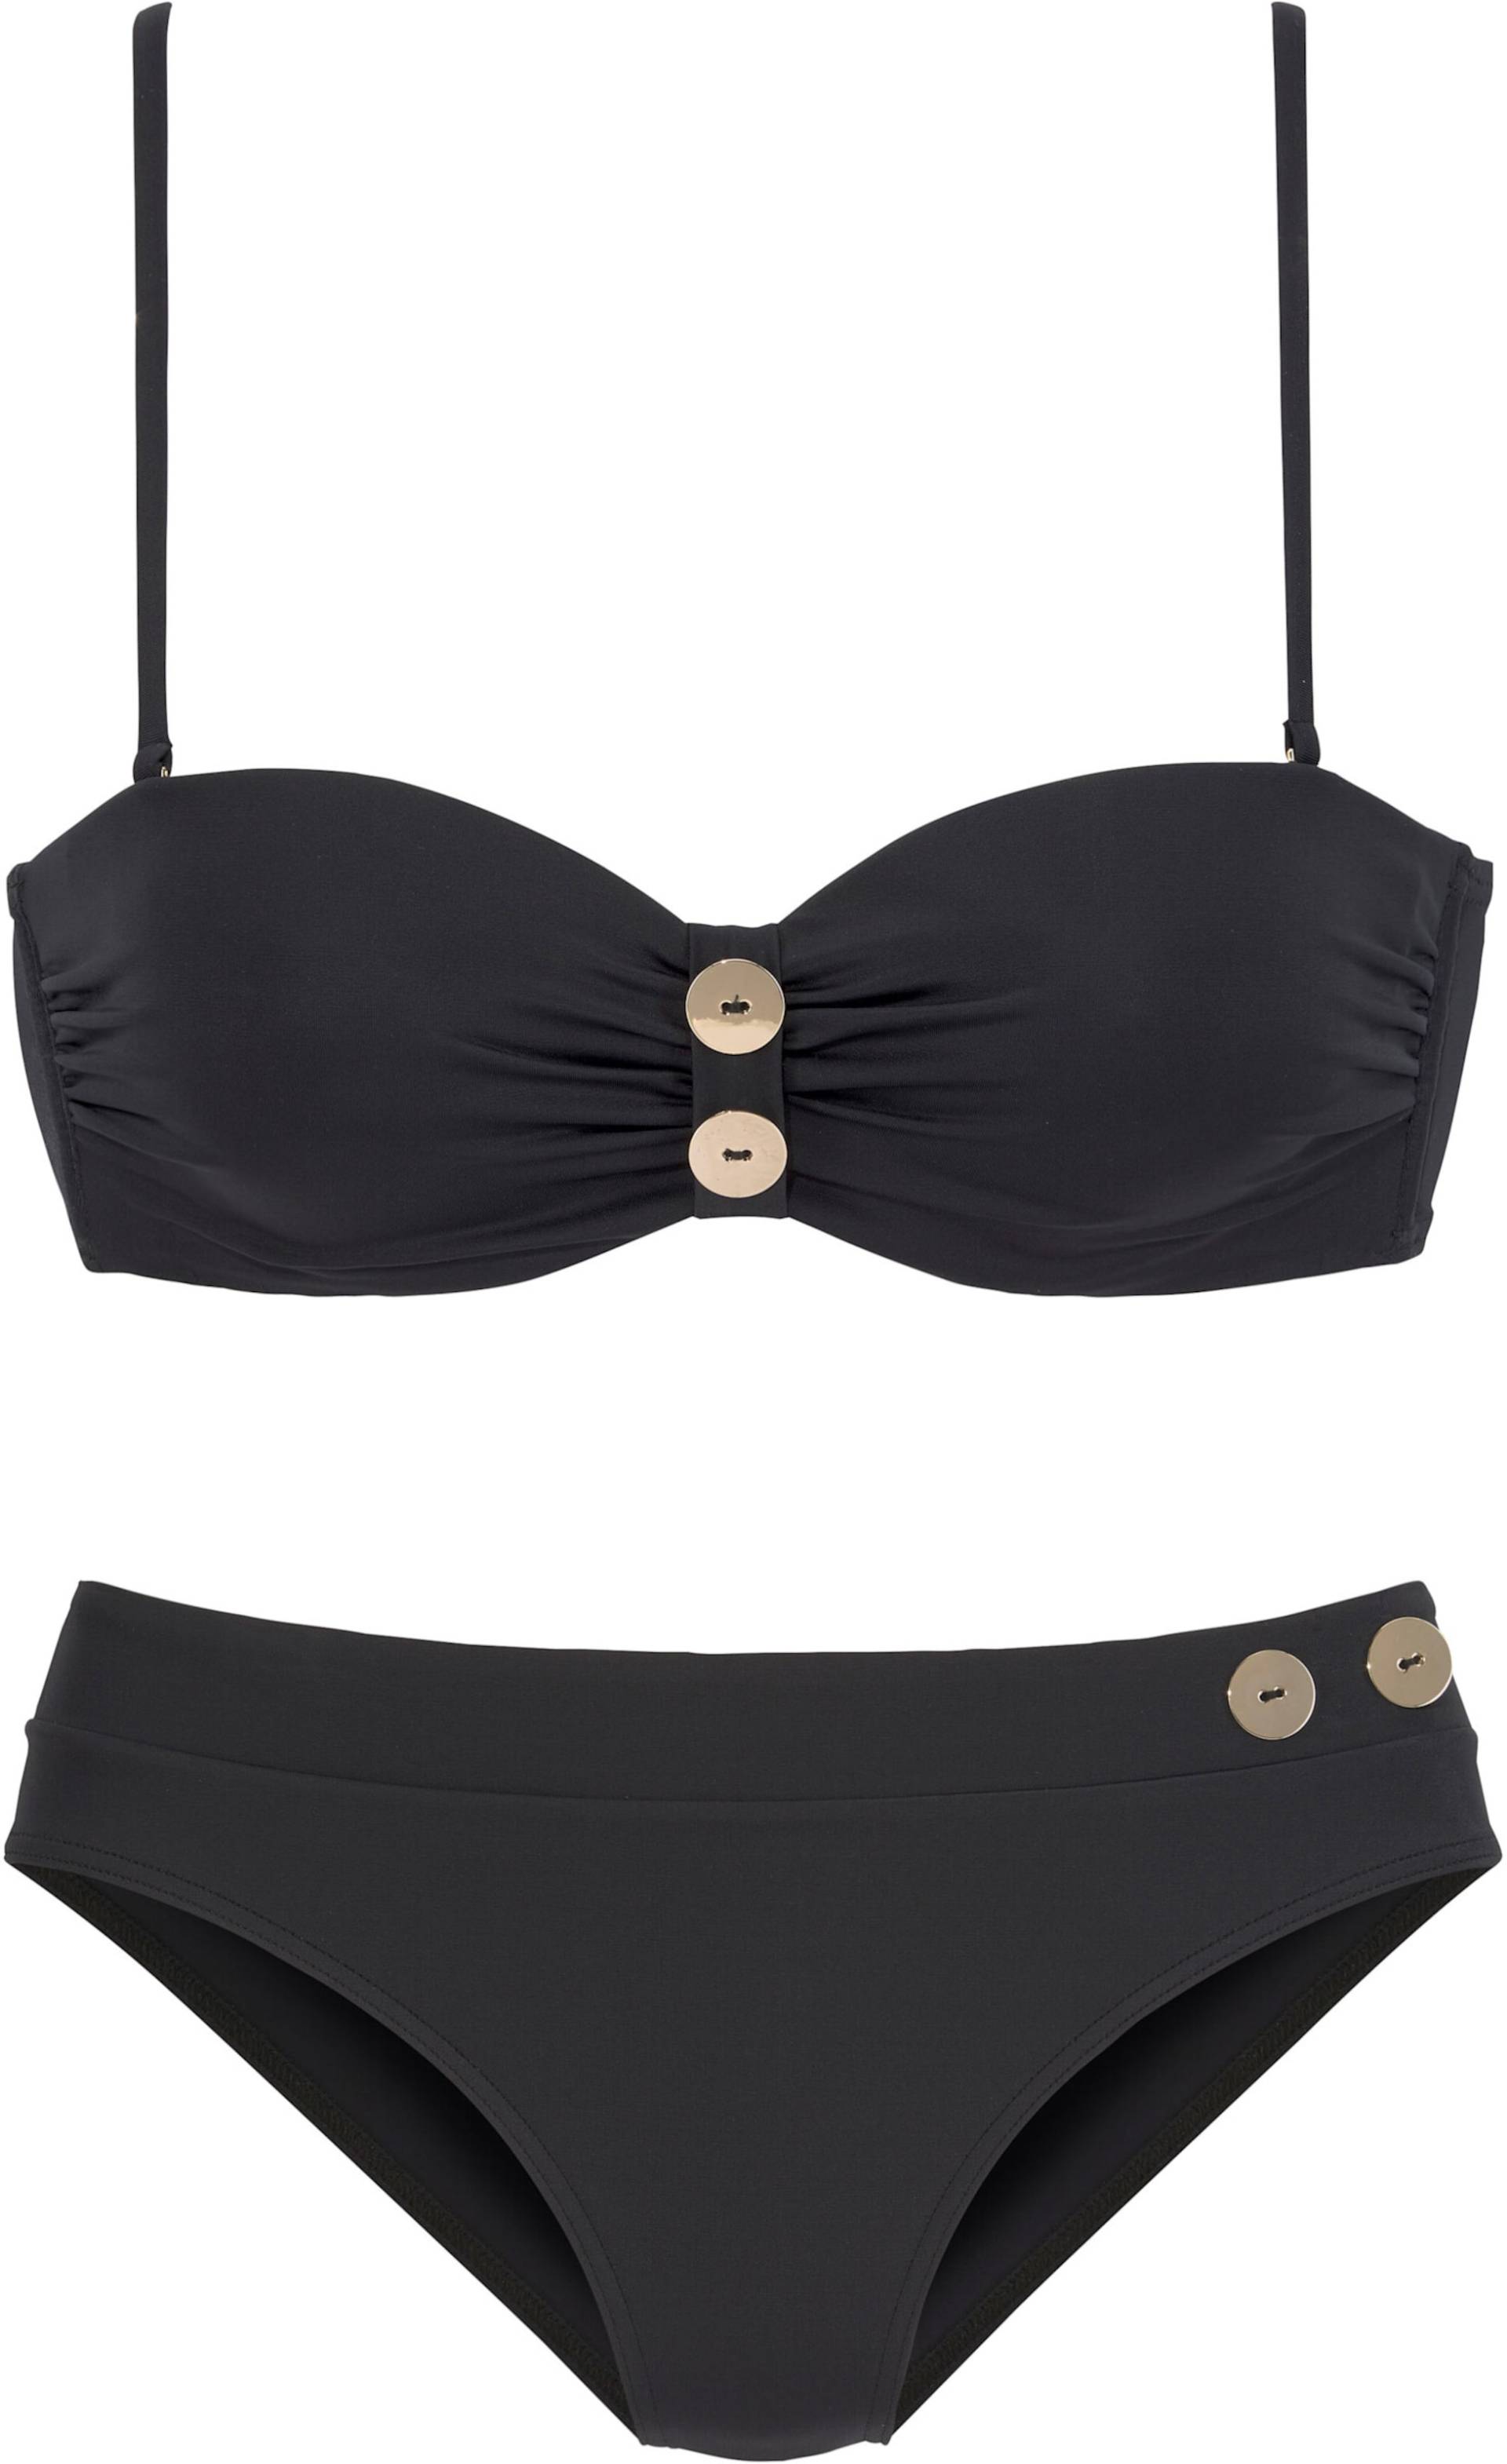 Bügel-Bandeau-Bikini in schwarz von Vivance